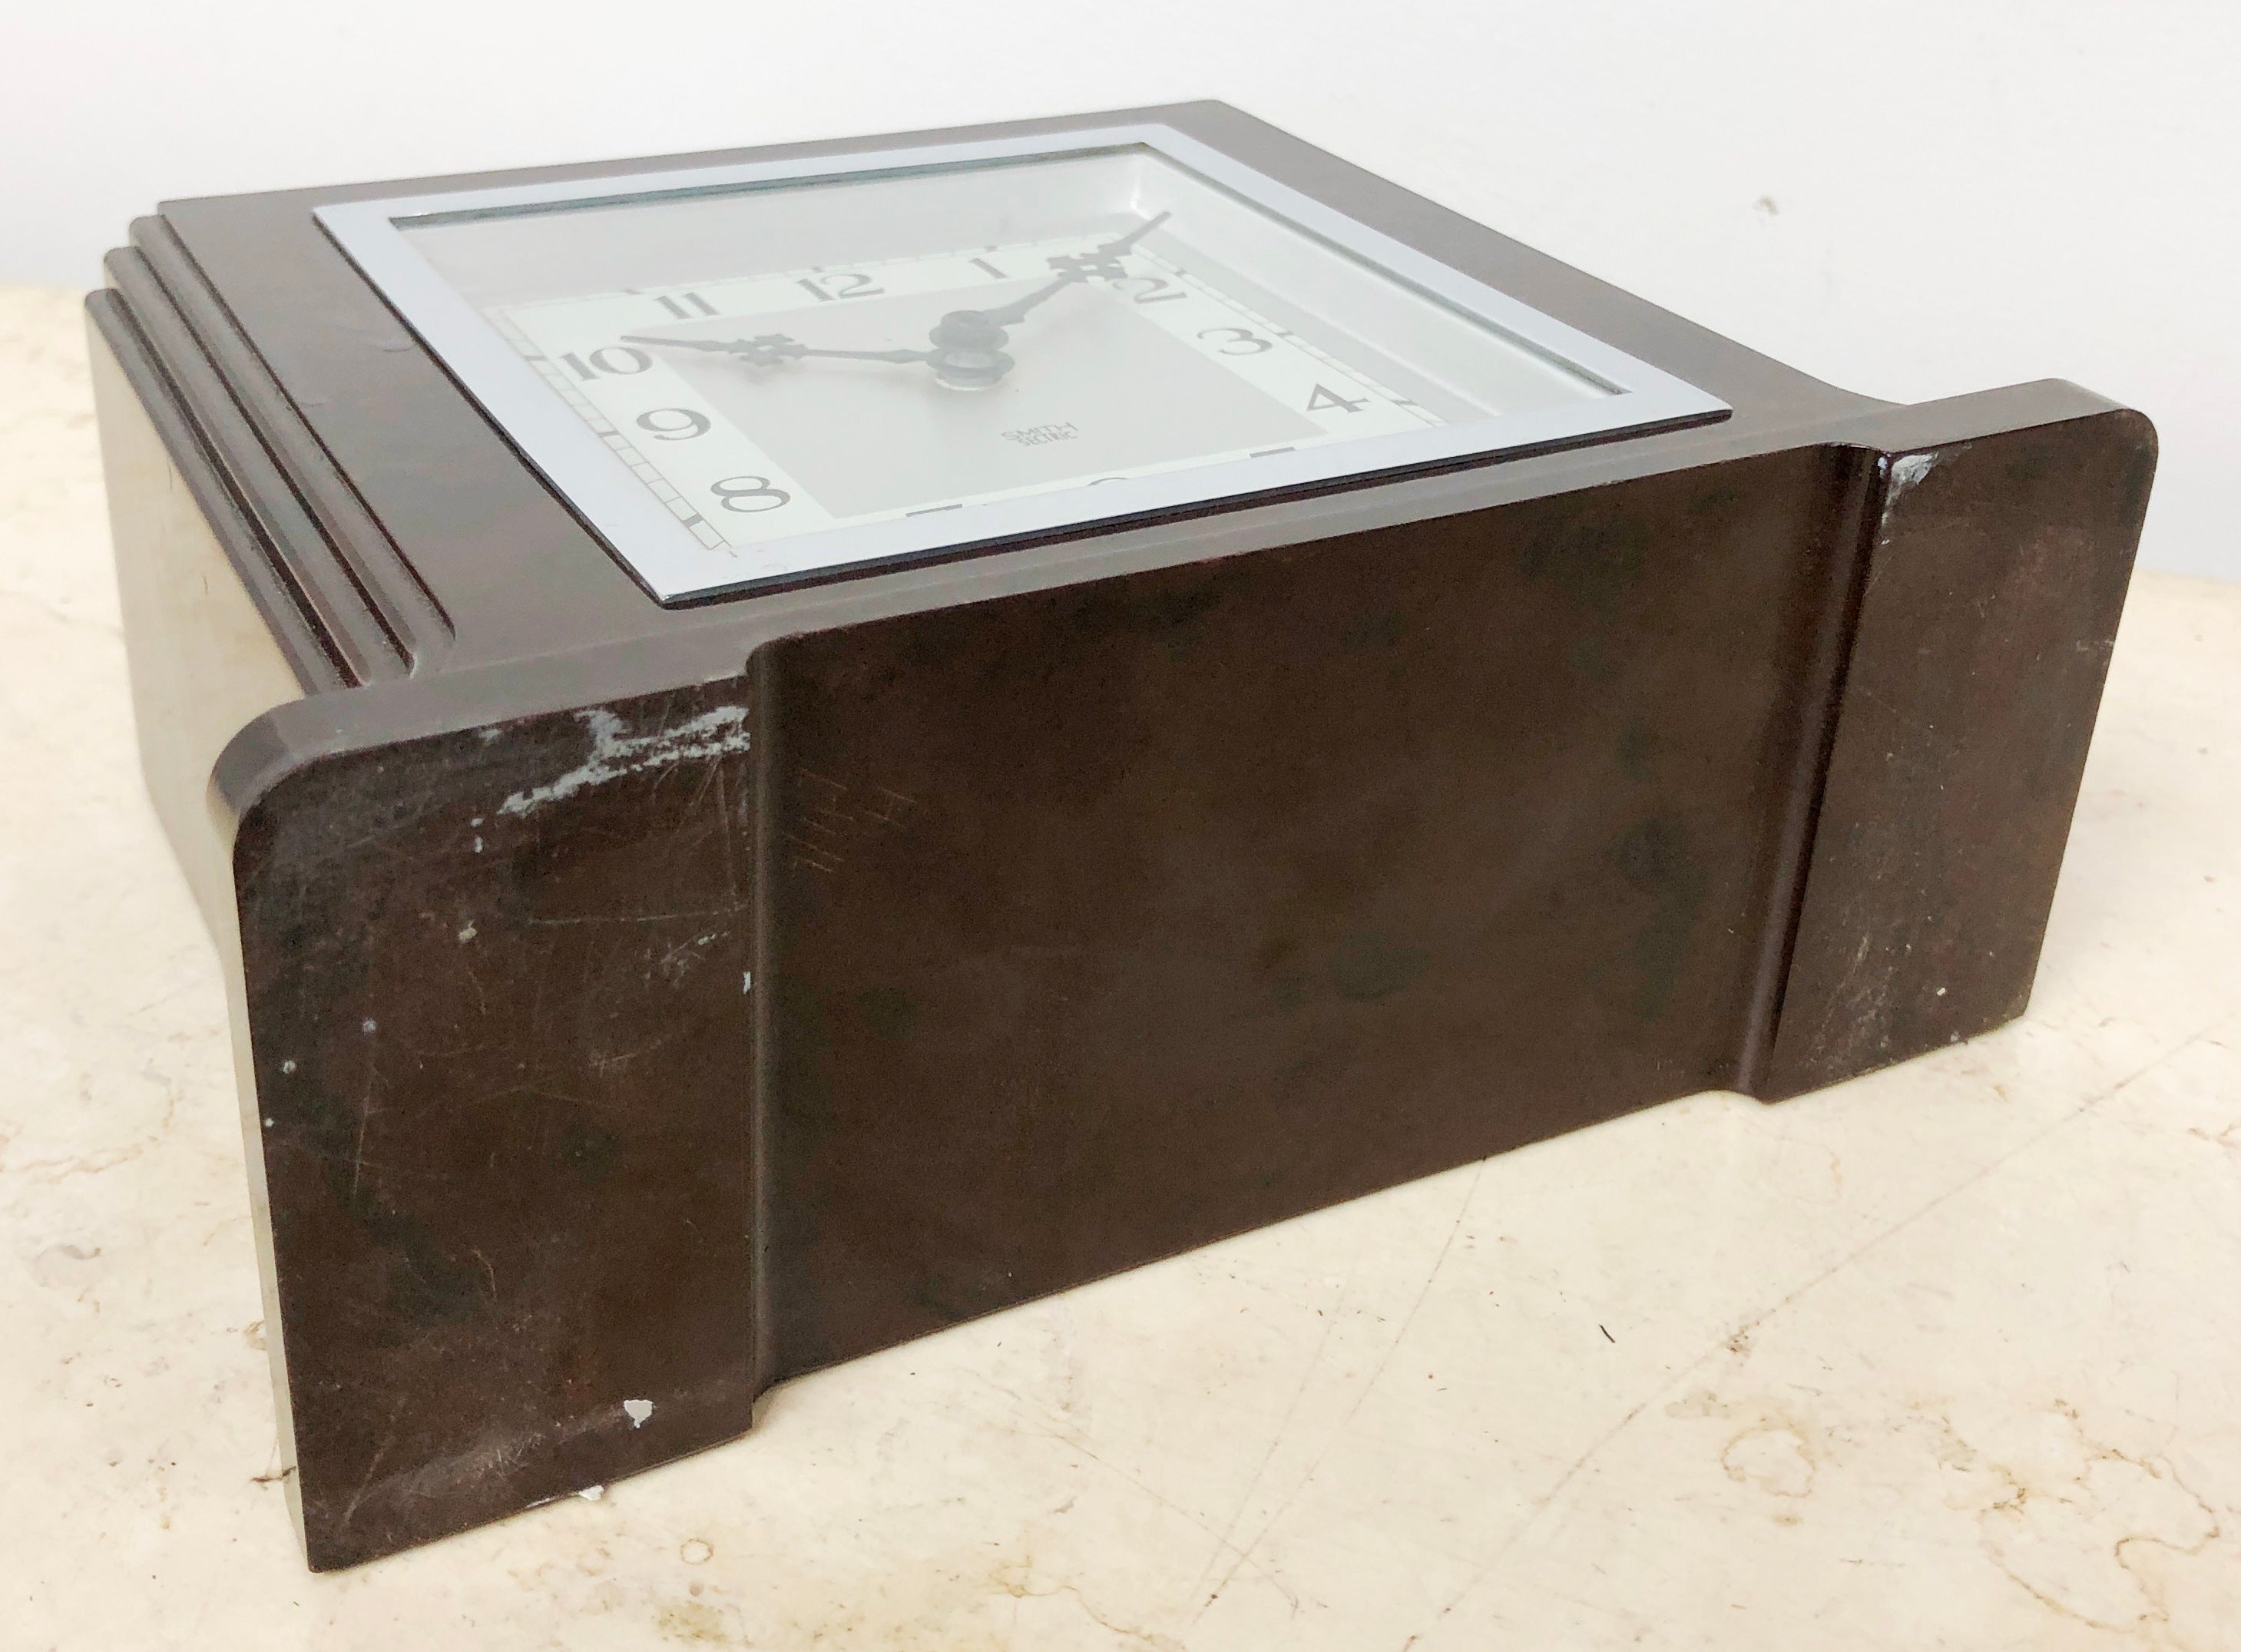 Vintage SMITHS Bakelite Sectric Battery Mantel Clock | eXibit collection